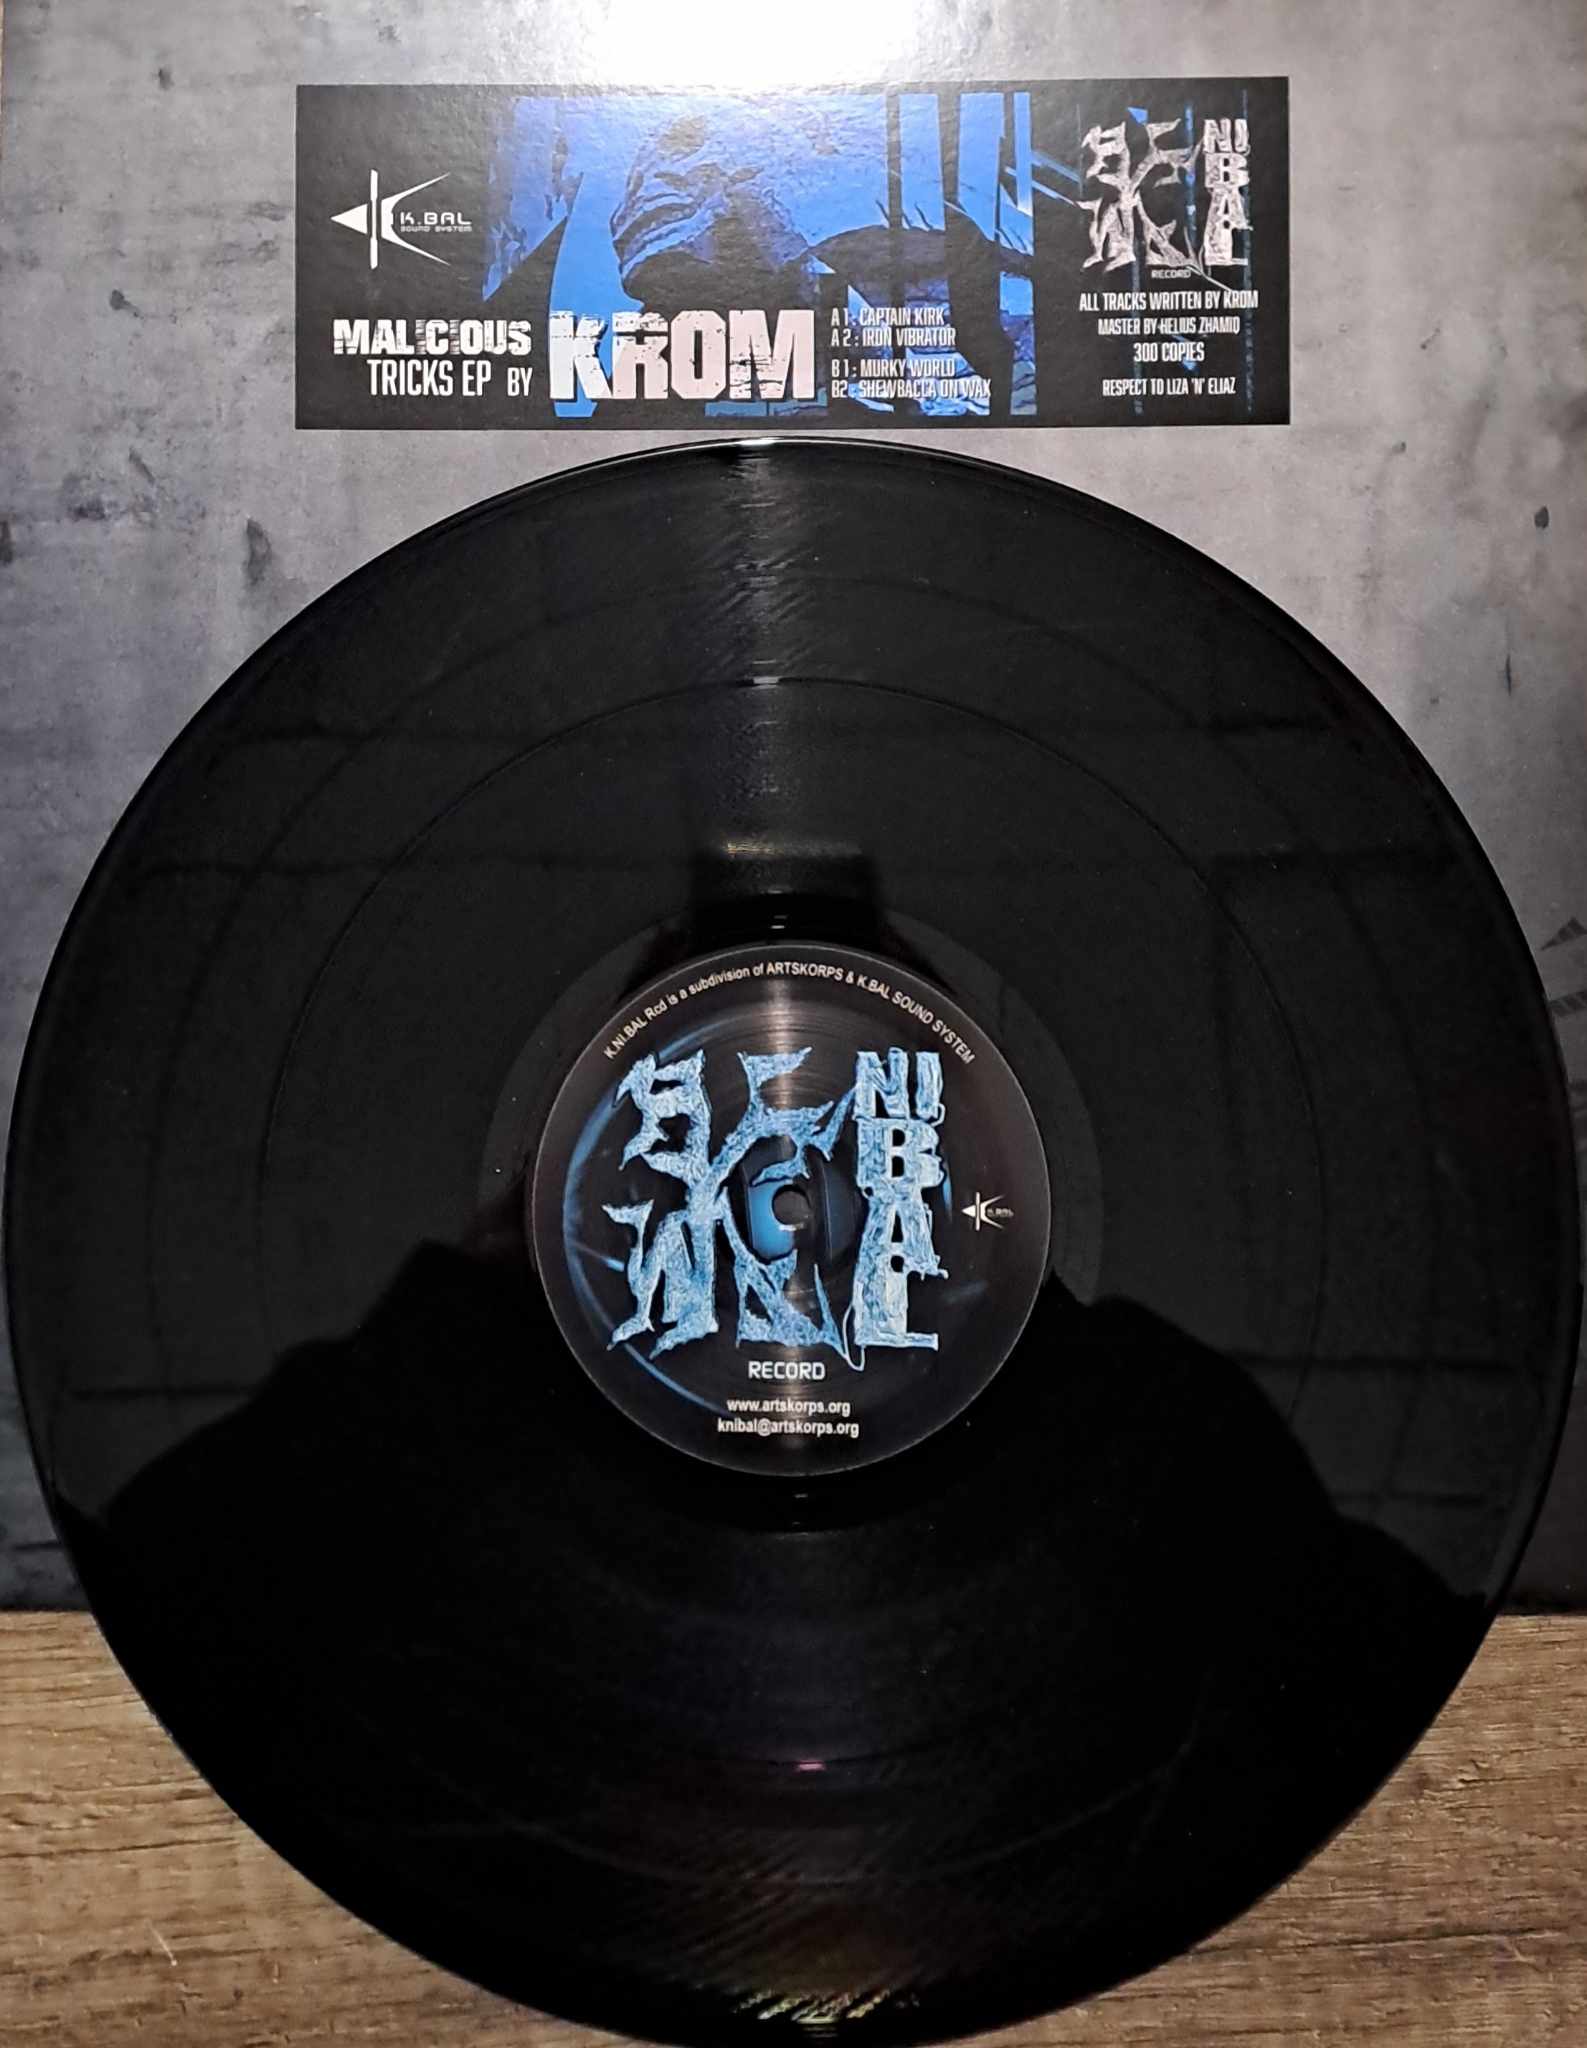 K.Ni.Bal Record 12 Black (dernières copies en stock) - vinyle hardcore